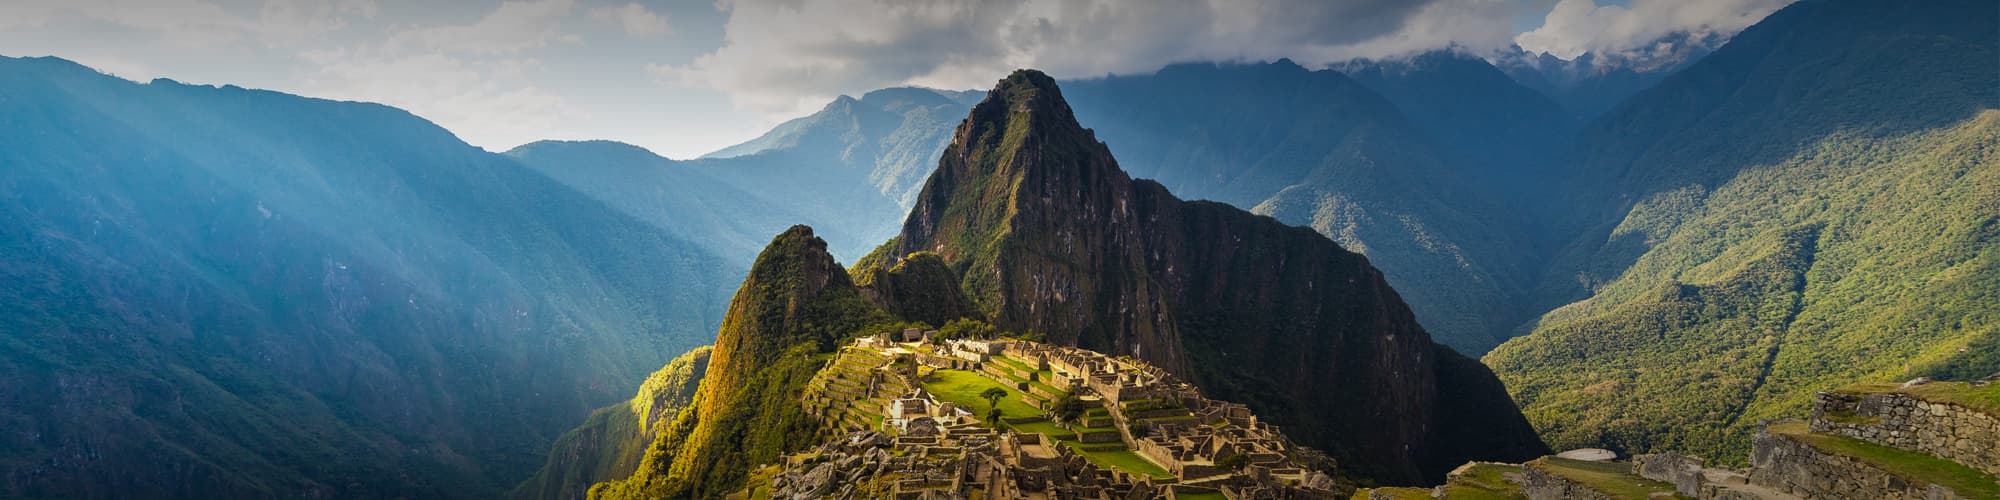 Randonnée avec mulet Pérou © Oversnap / iStock